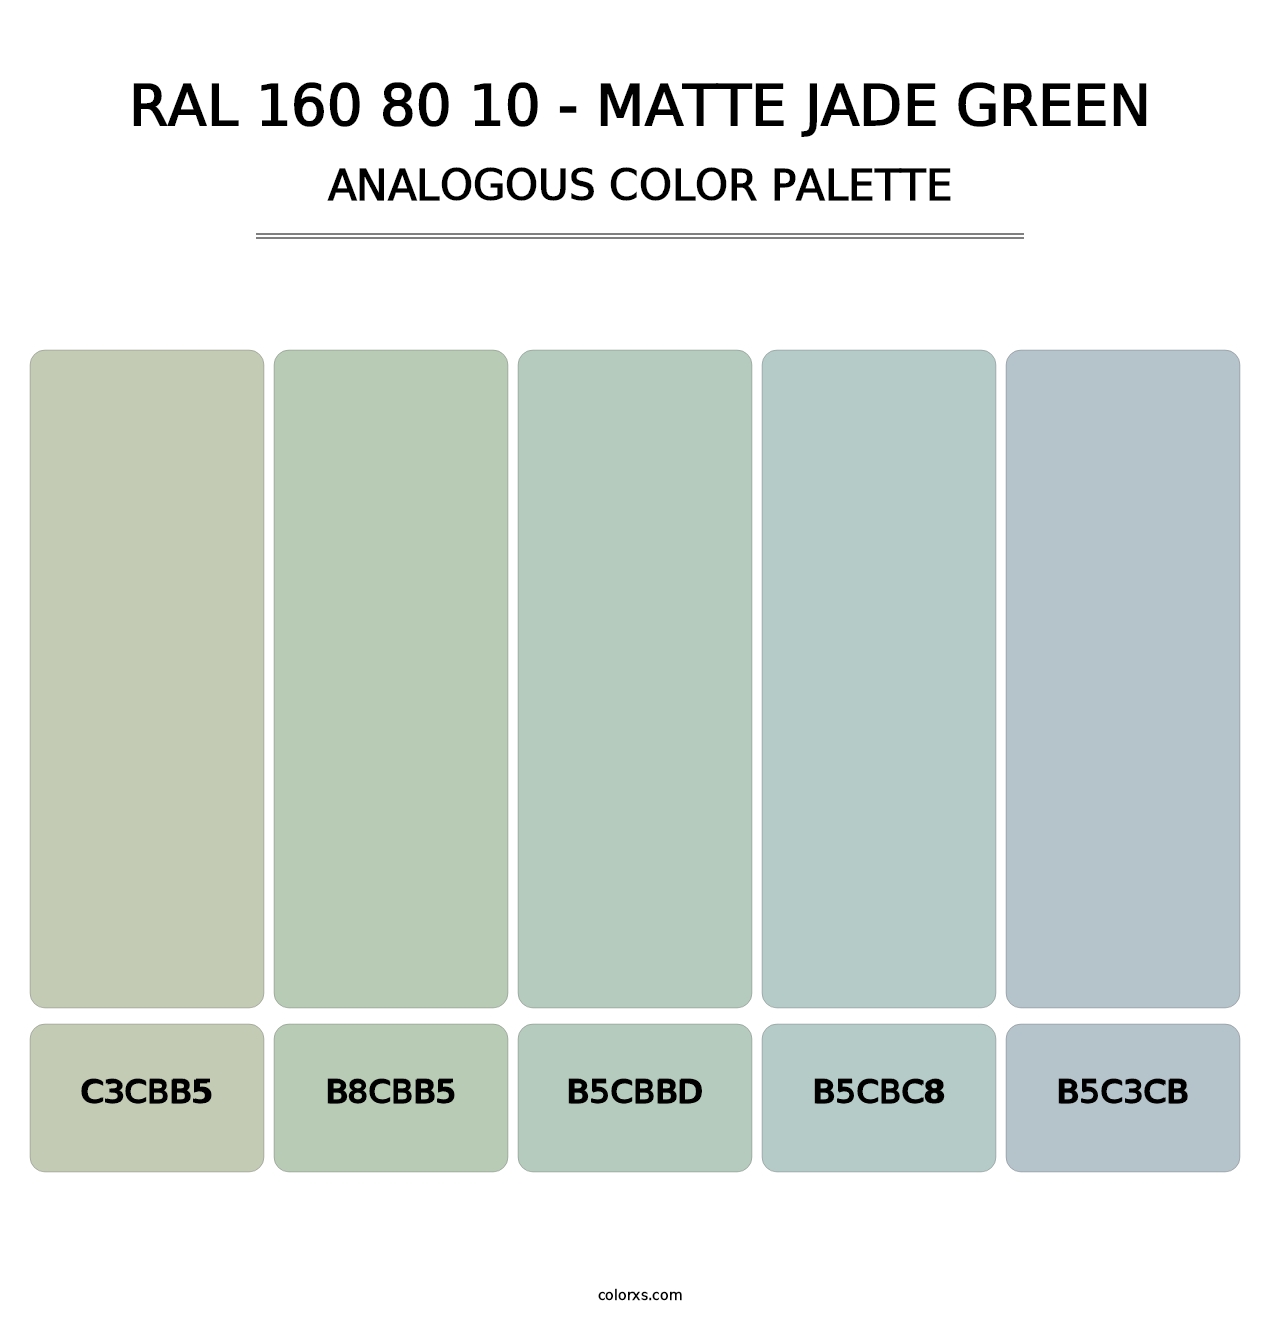 RAL 160 80 10 - Matte Jade Green - Analogous Color Palette